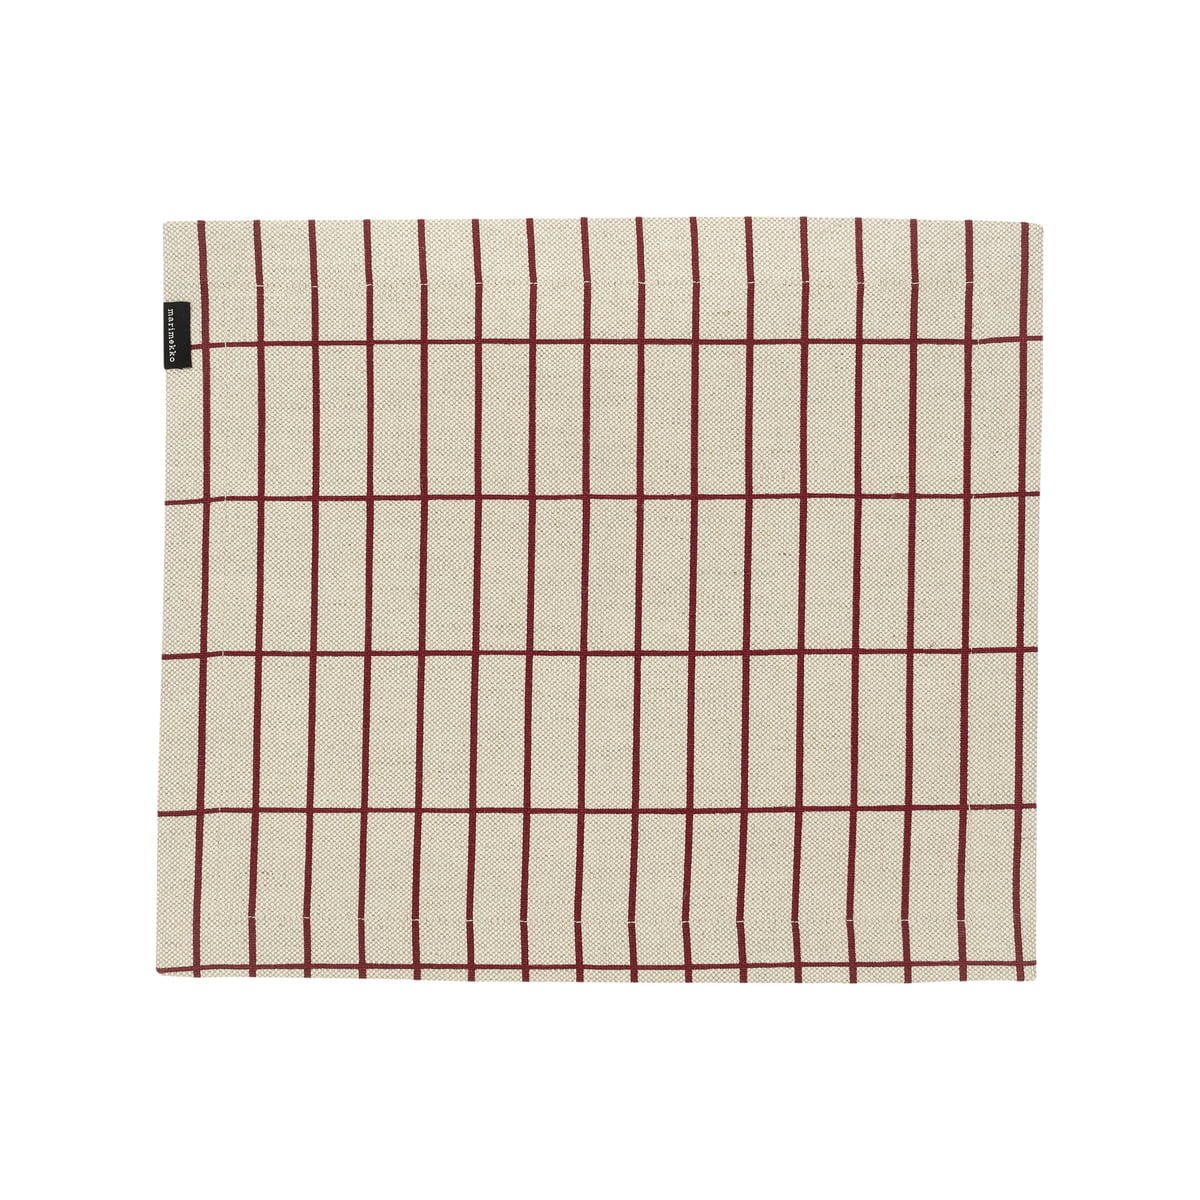 marimekko - pieni tiiliskivi set de table 47 x 36 cm, lin / rouge foncé